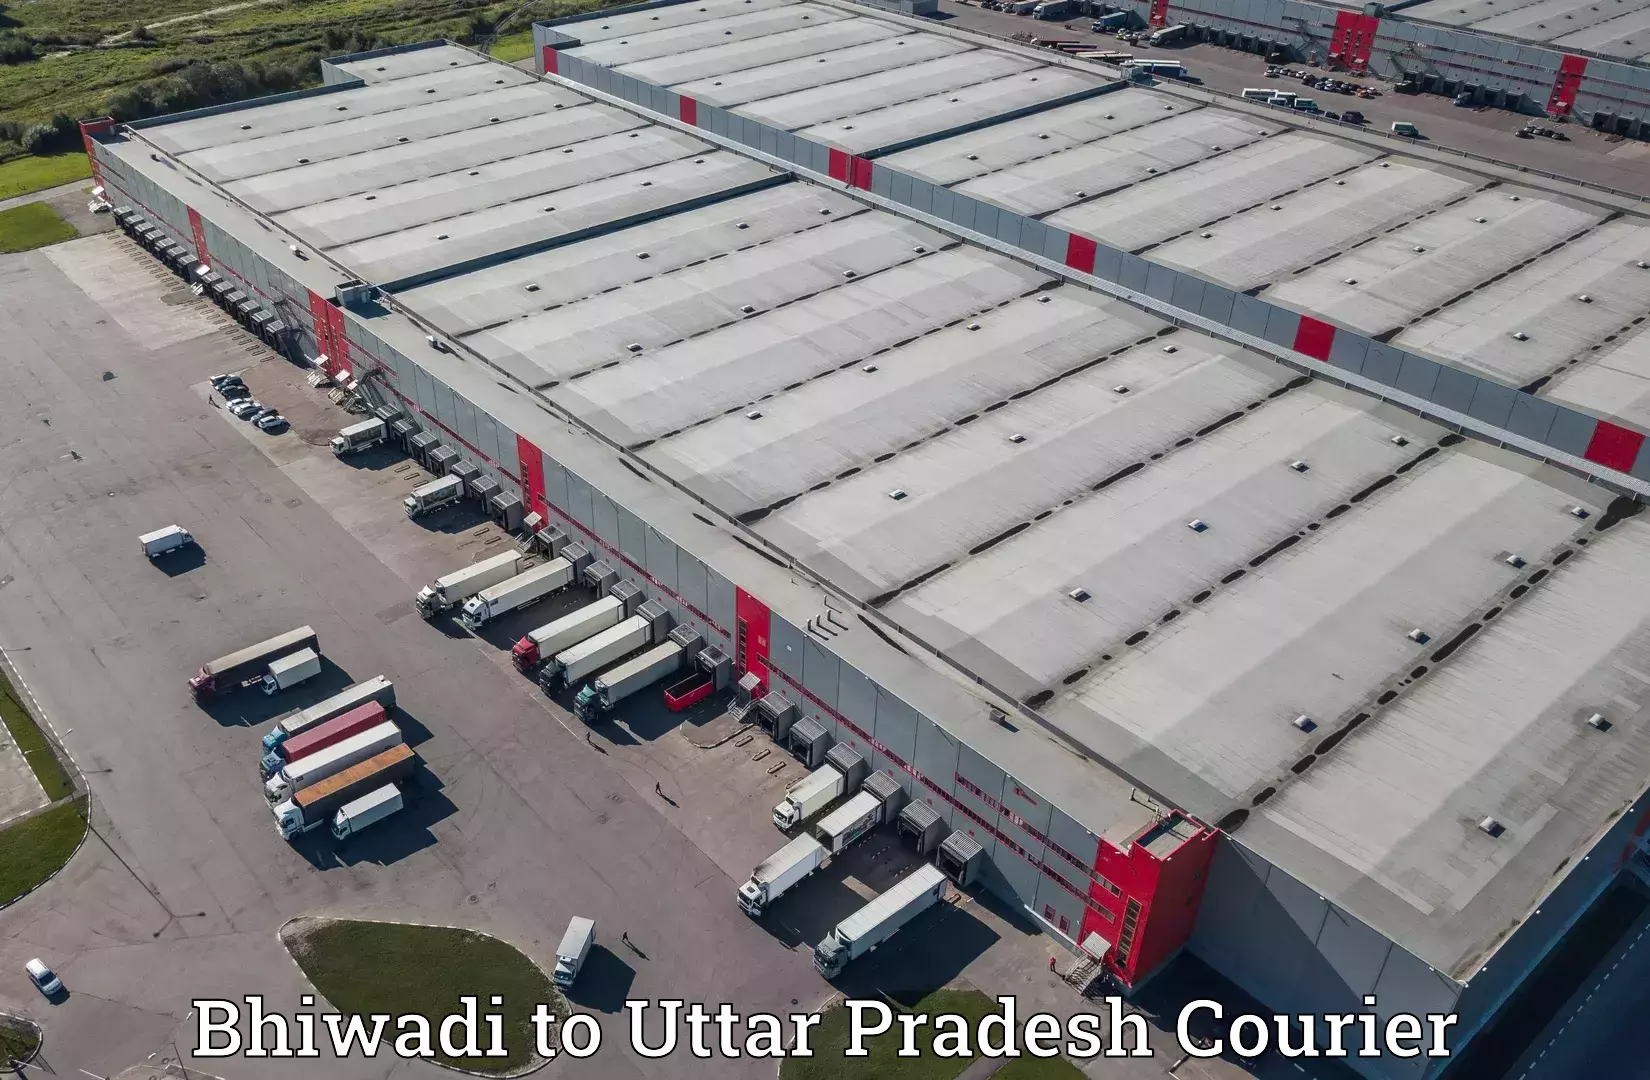 Courier service innovation Bhiwadi to Uttar Pradesh